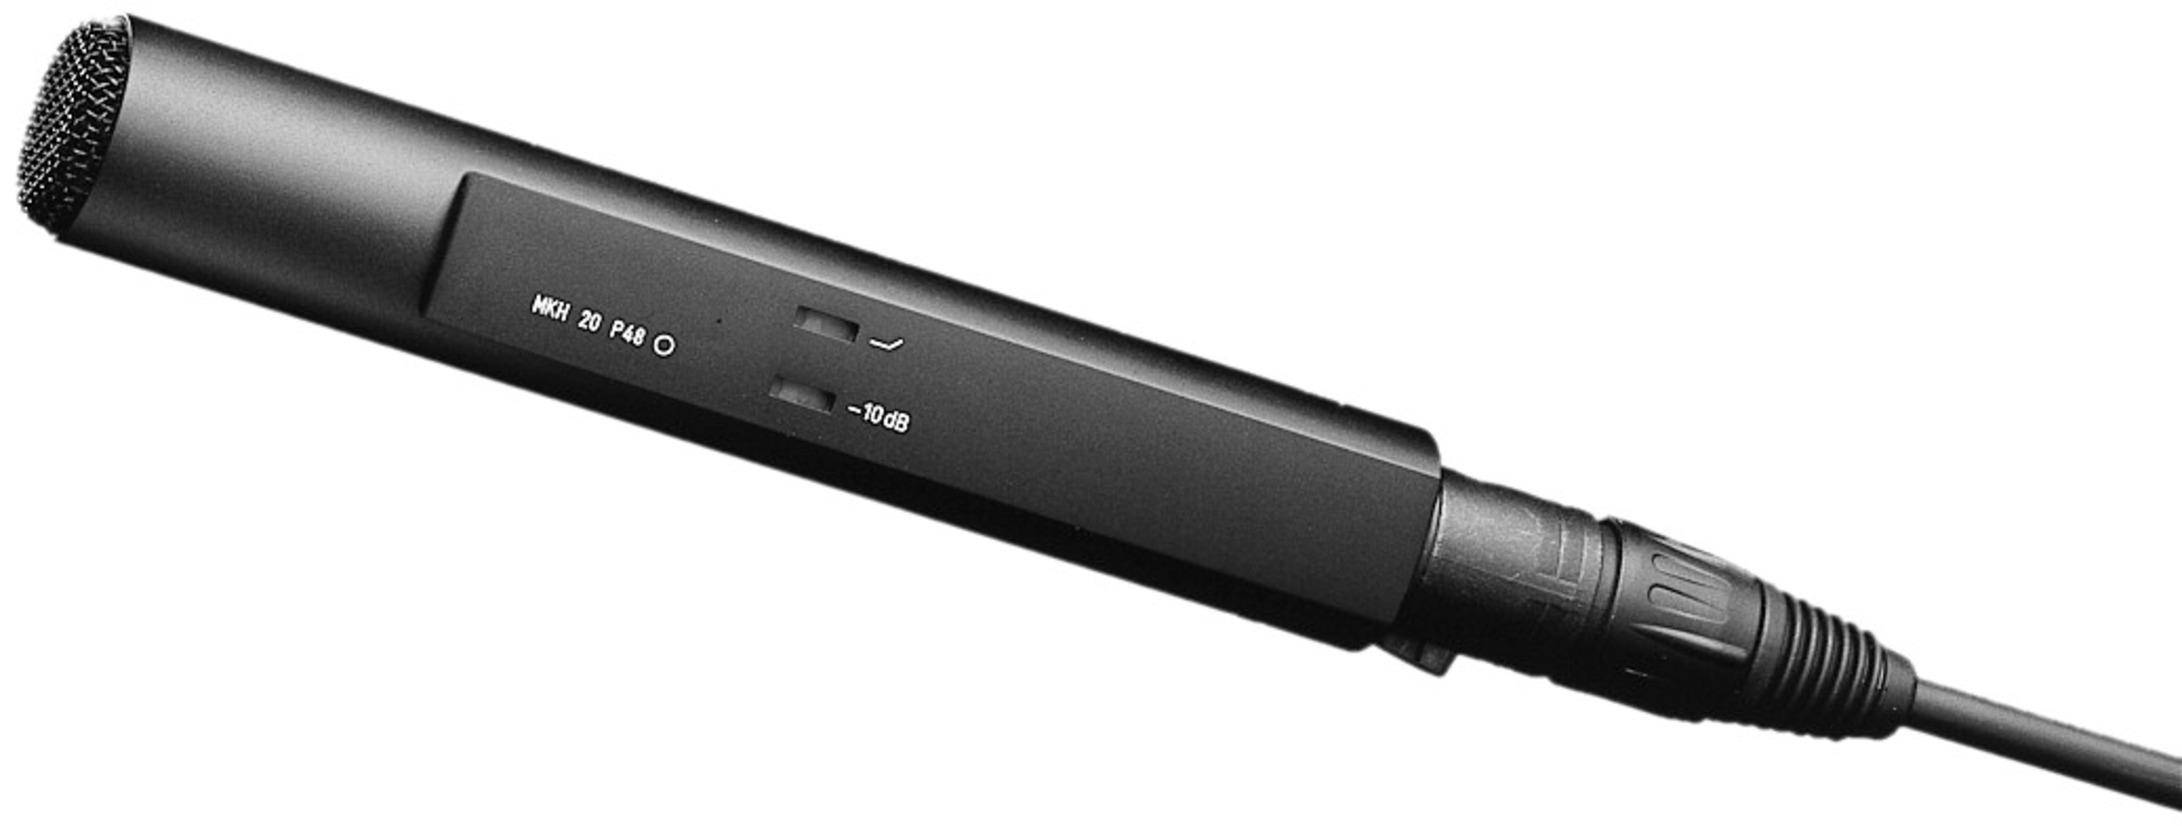 Sennheiser MKH 20-P48 Omni-Directional Condenser Microphone zoom image